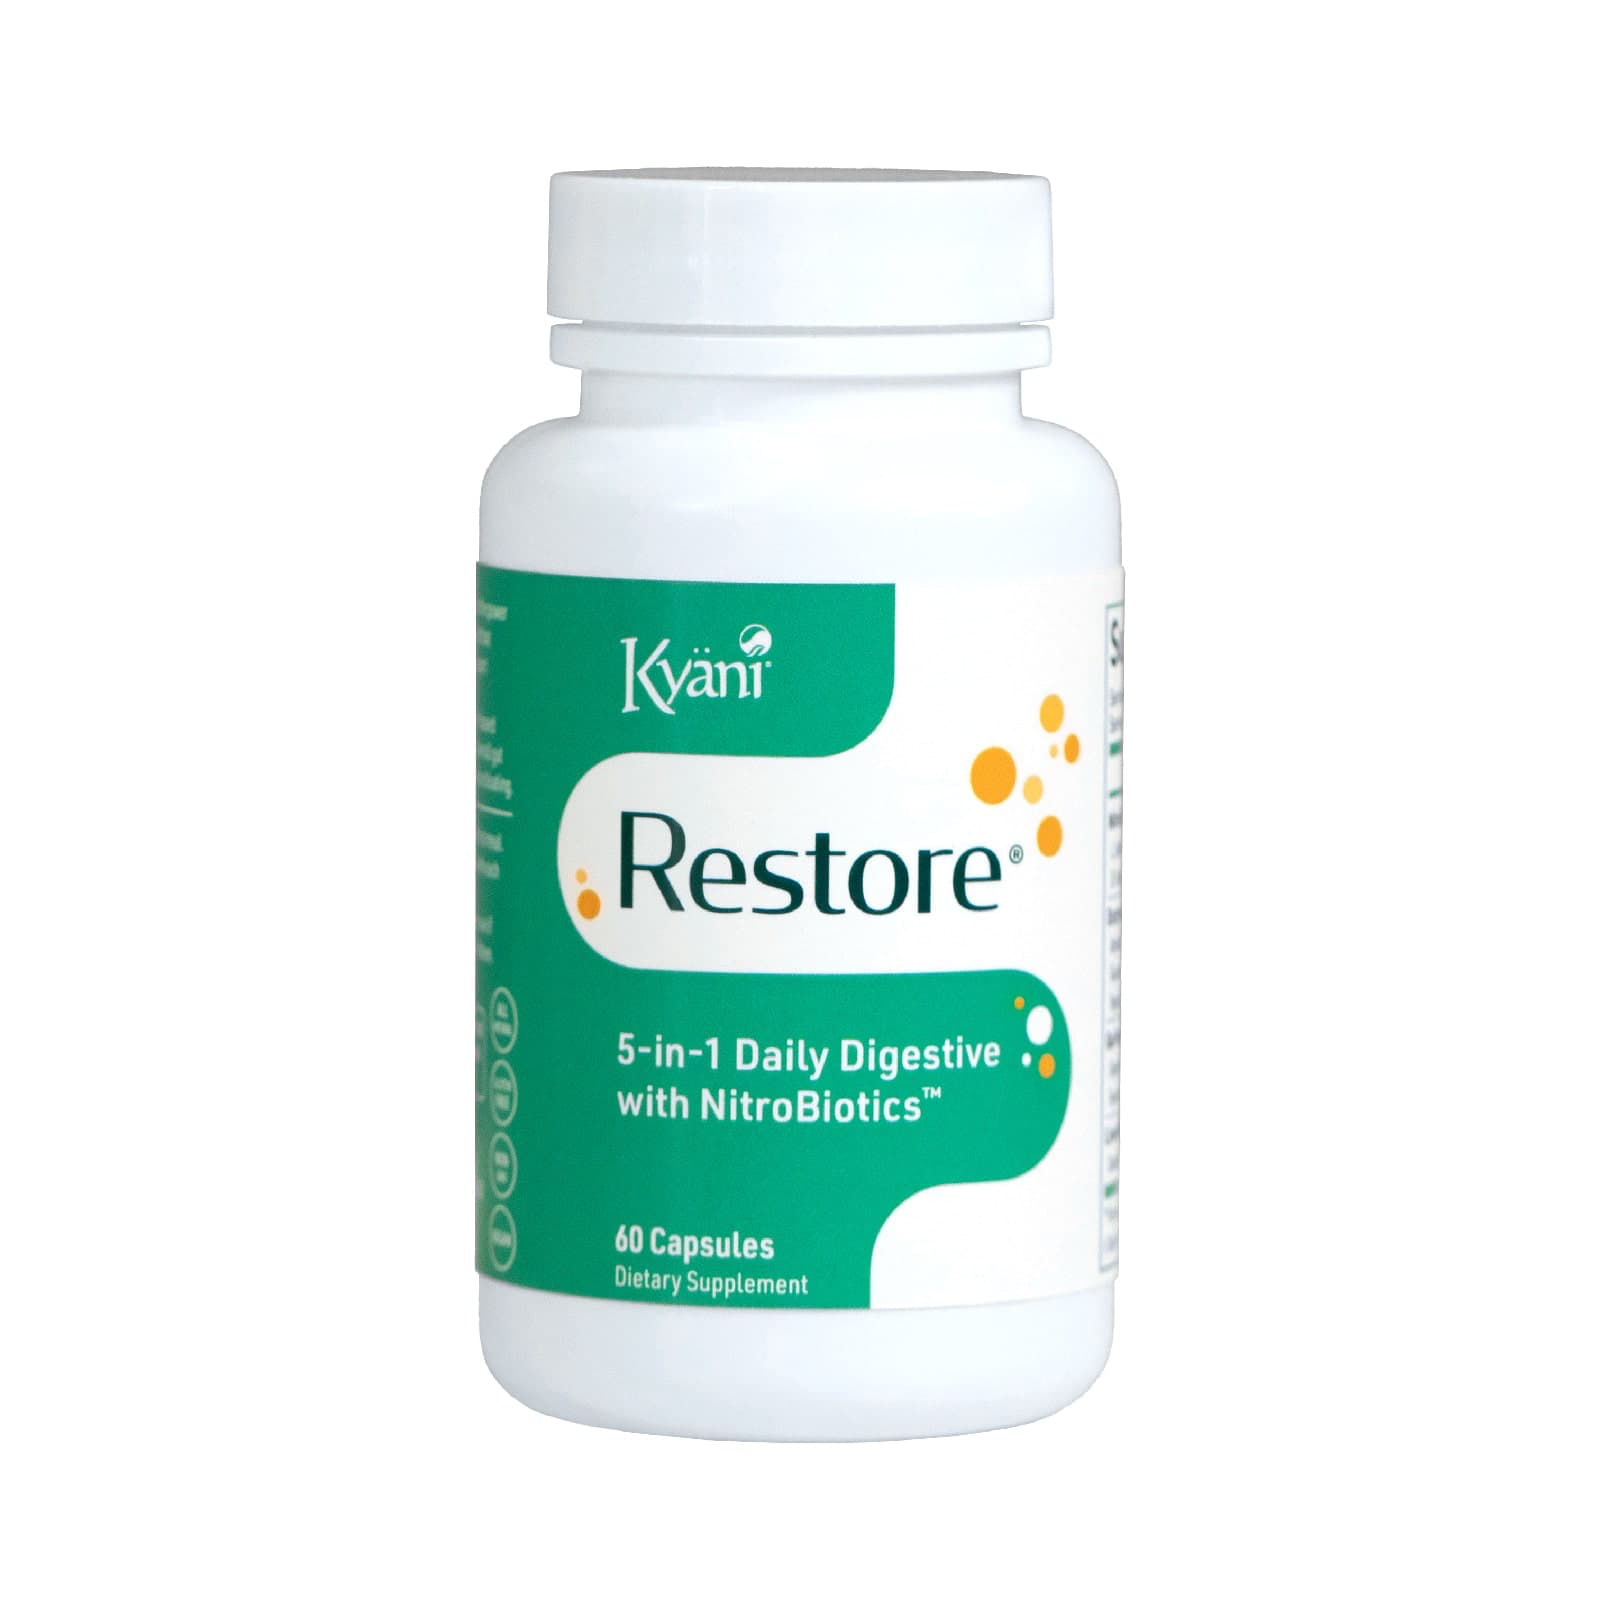 kyani-restore-probiotics